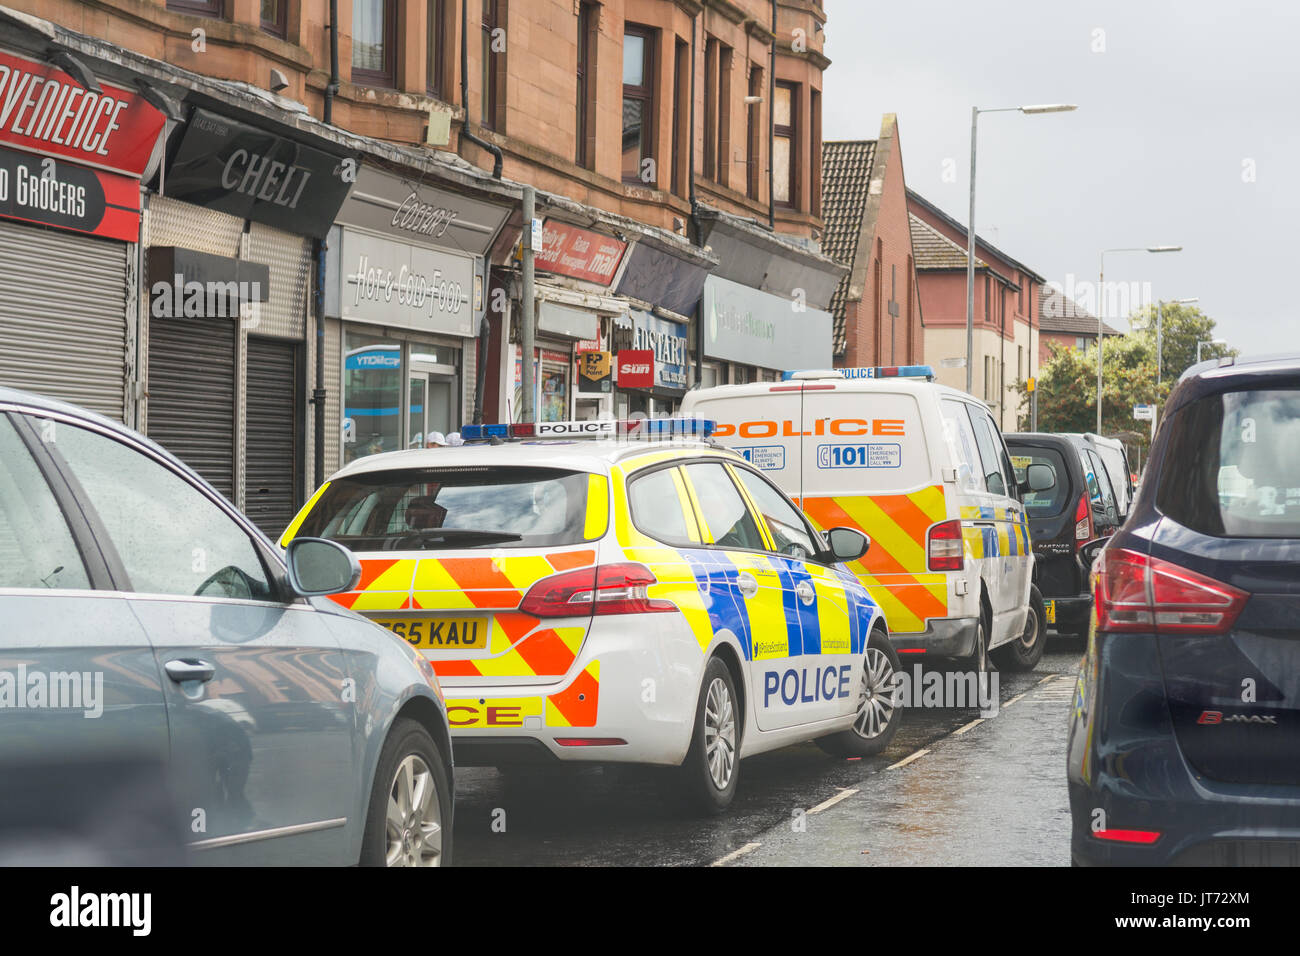 Police cars in Possilpark Possil in Glasgow, Scotland, UK Stock Photo